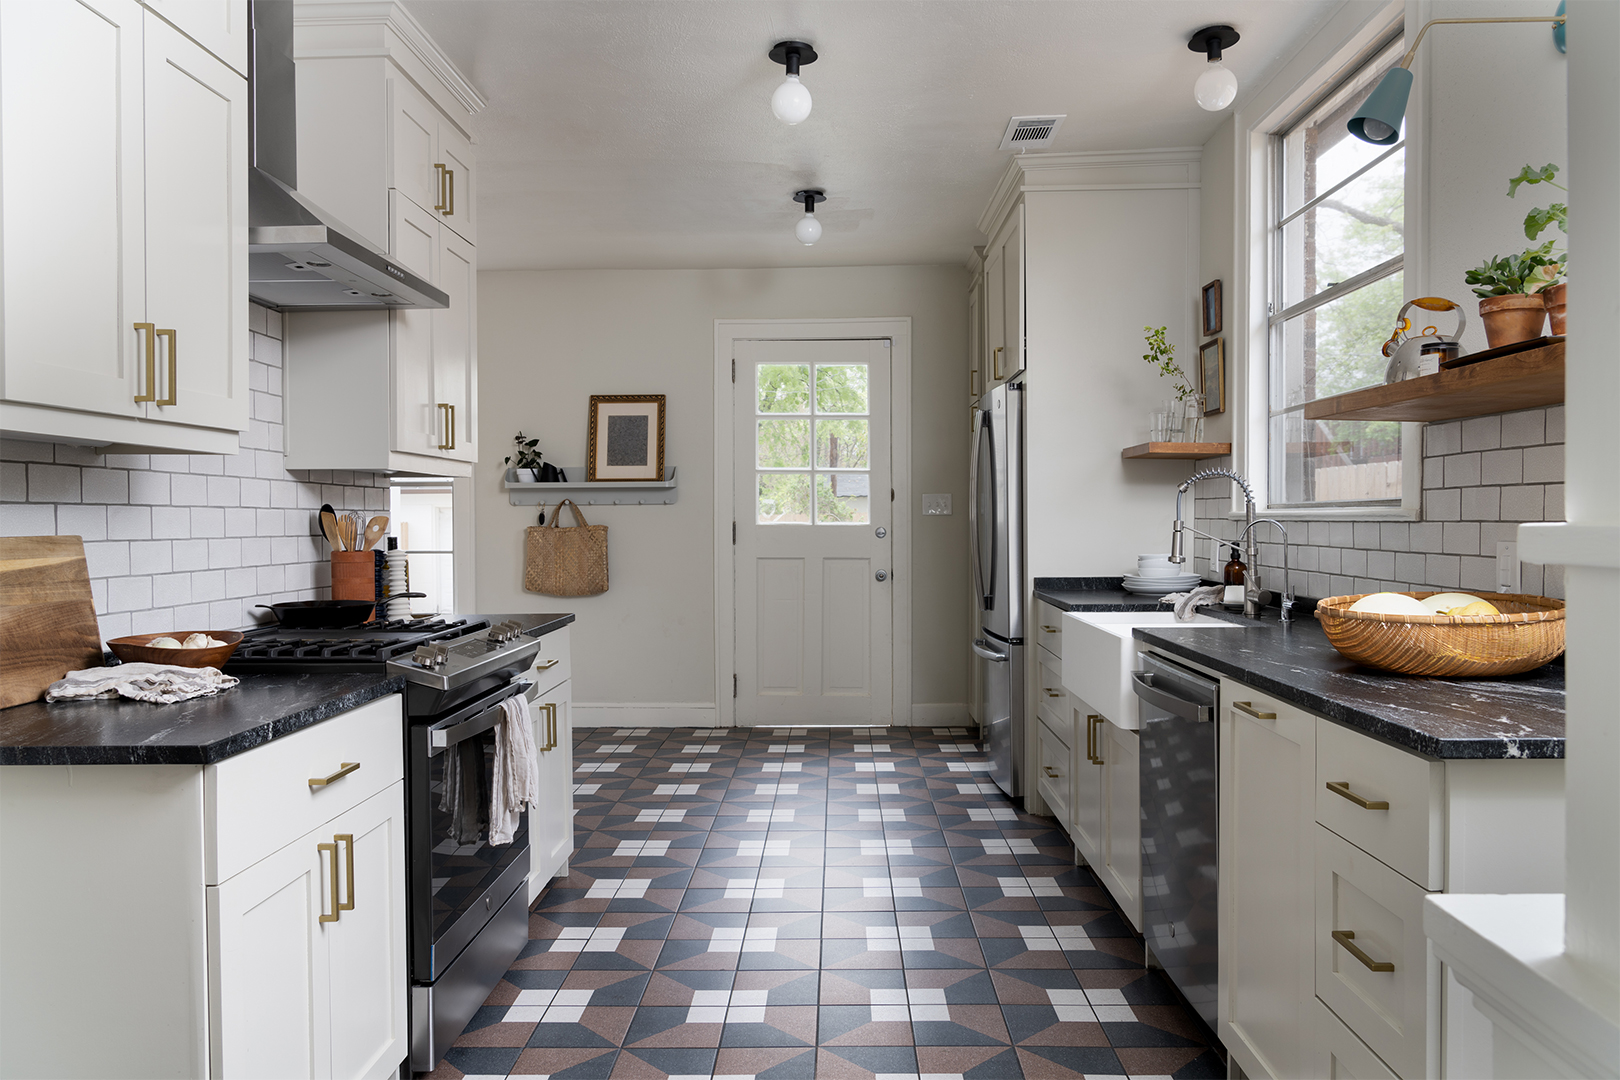 patterned kitchen floor